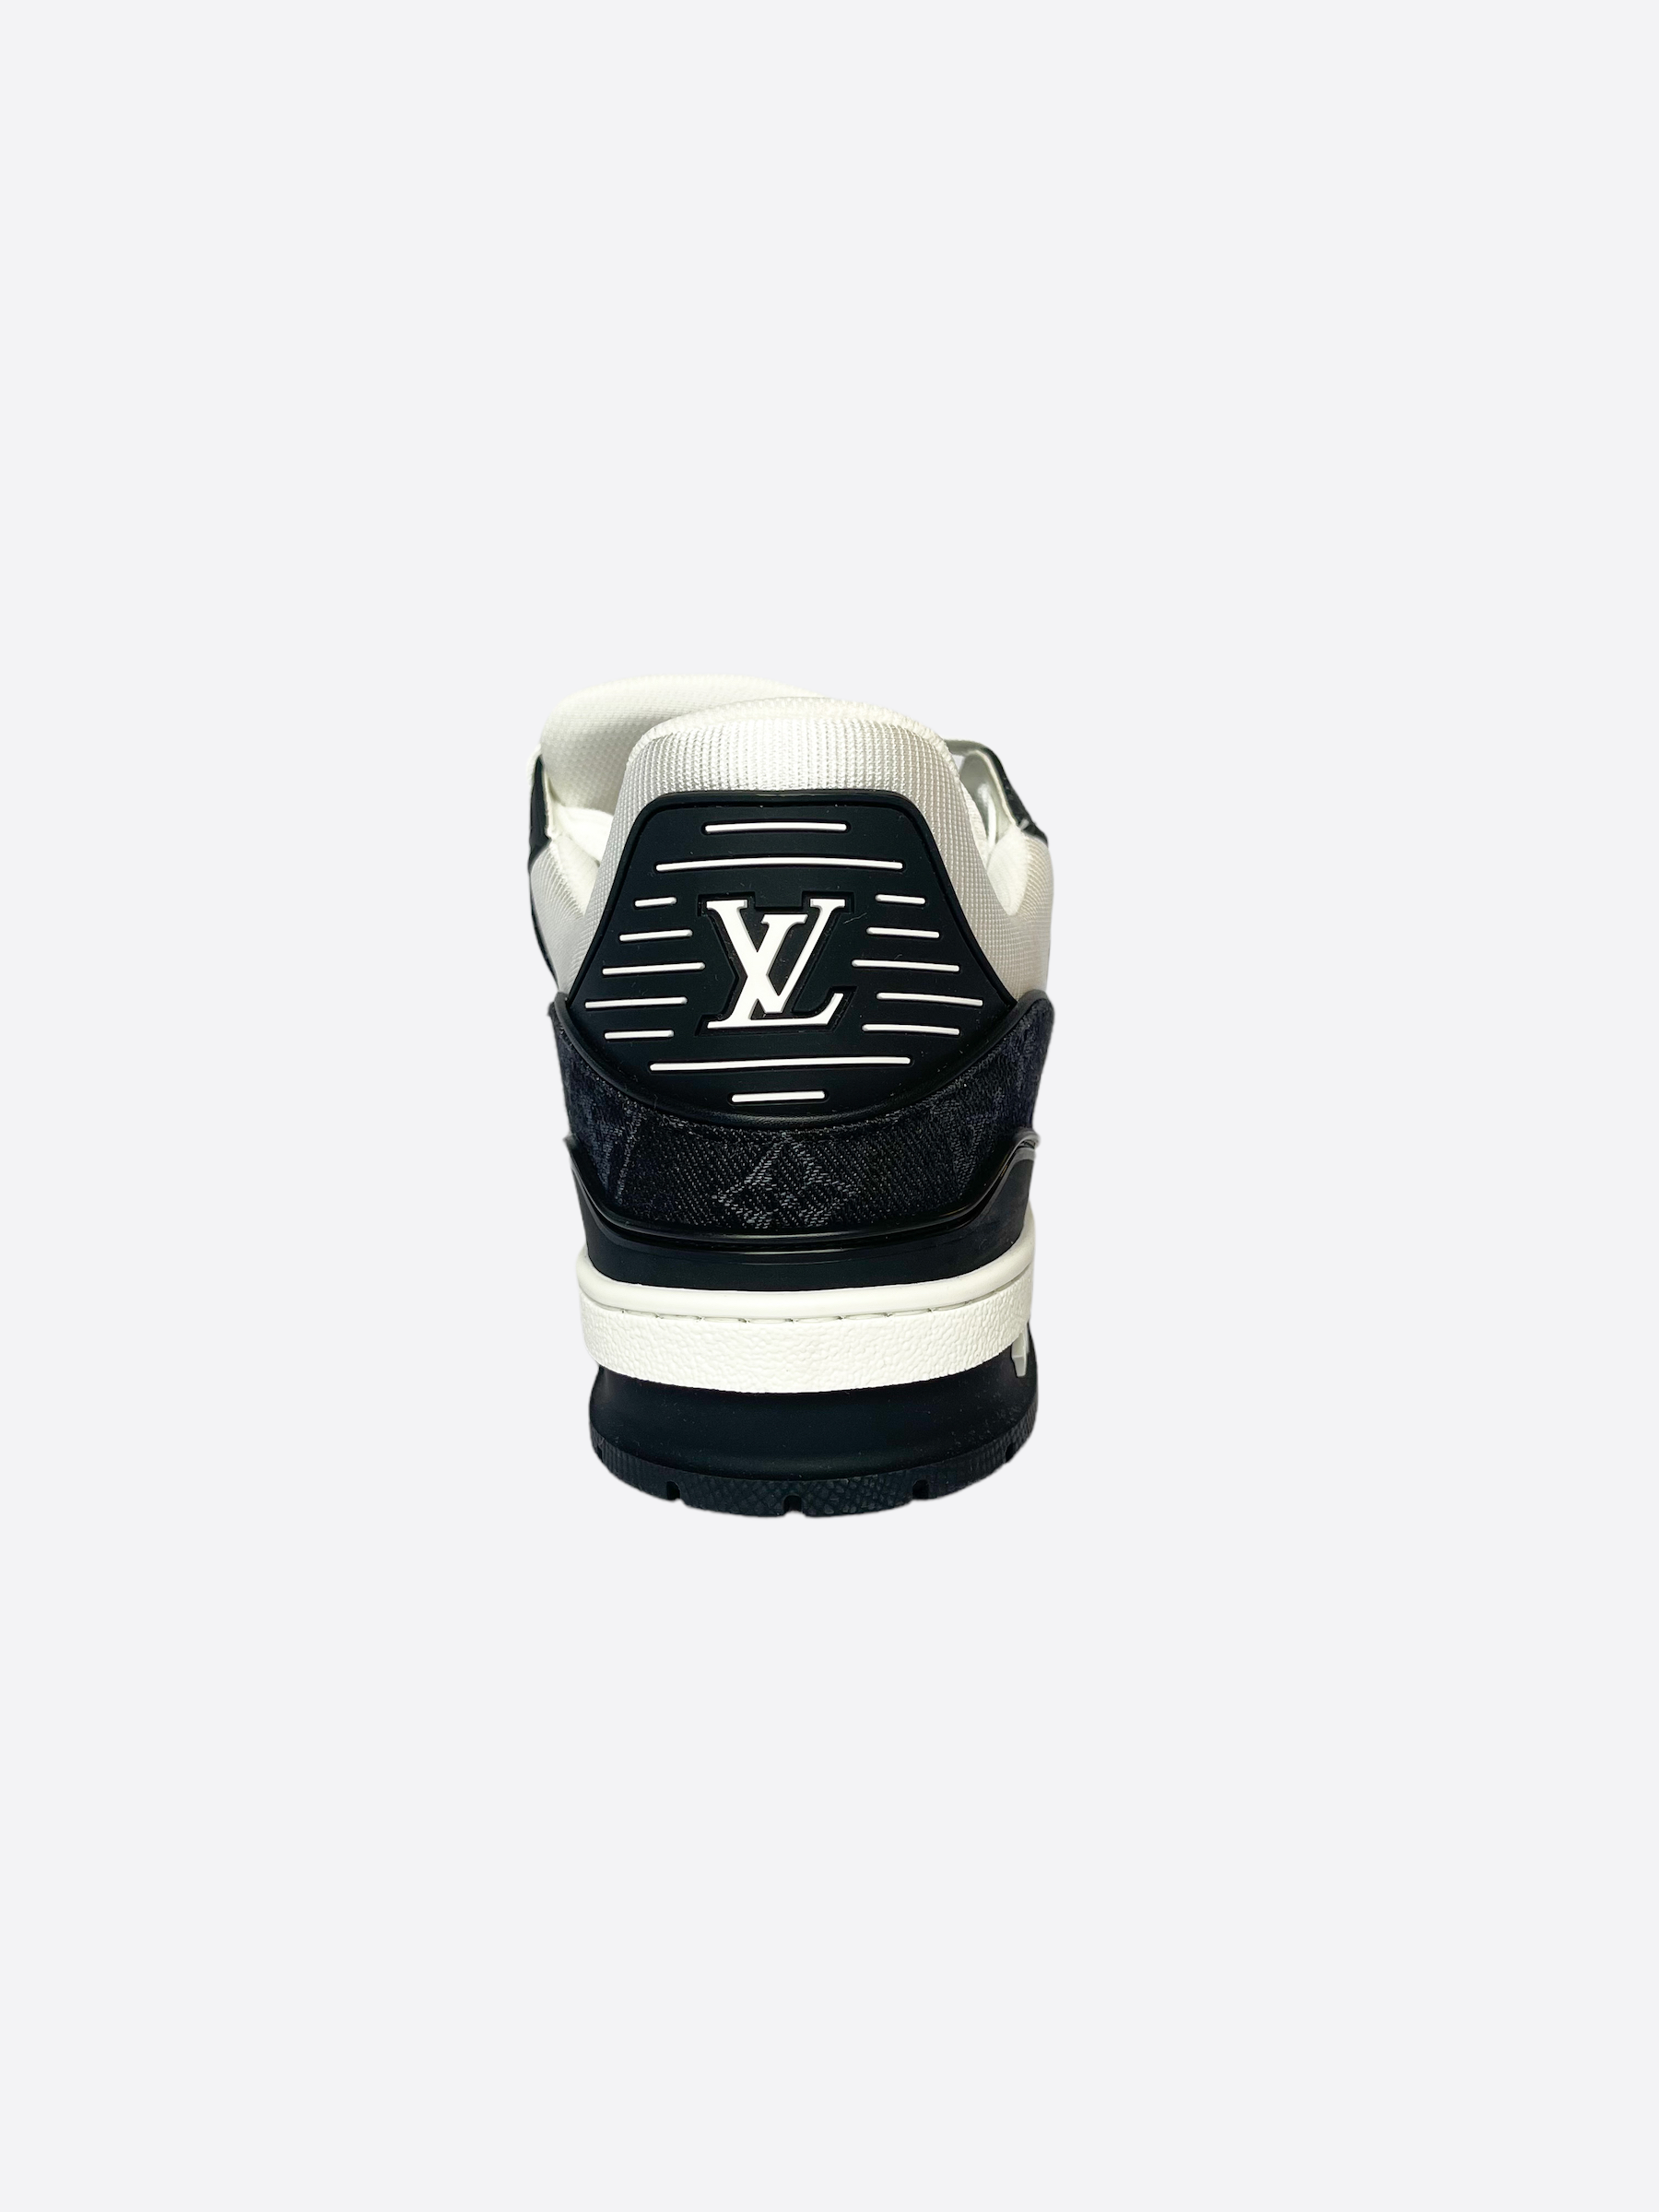 Louis Vuitton Run Away Monogram Tri Color Trainer Sneakers Size LV8 US9